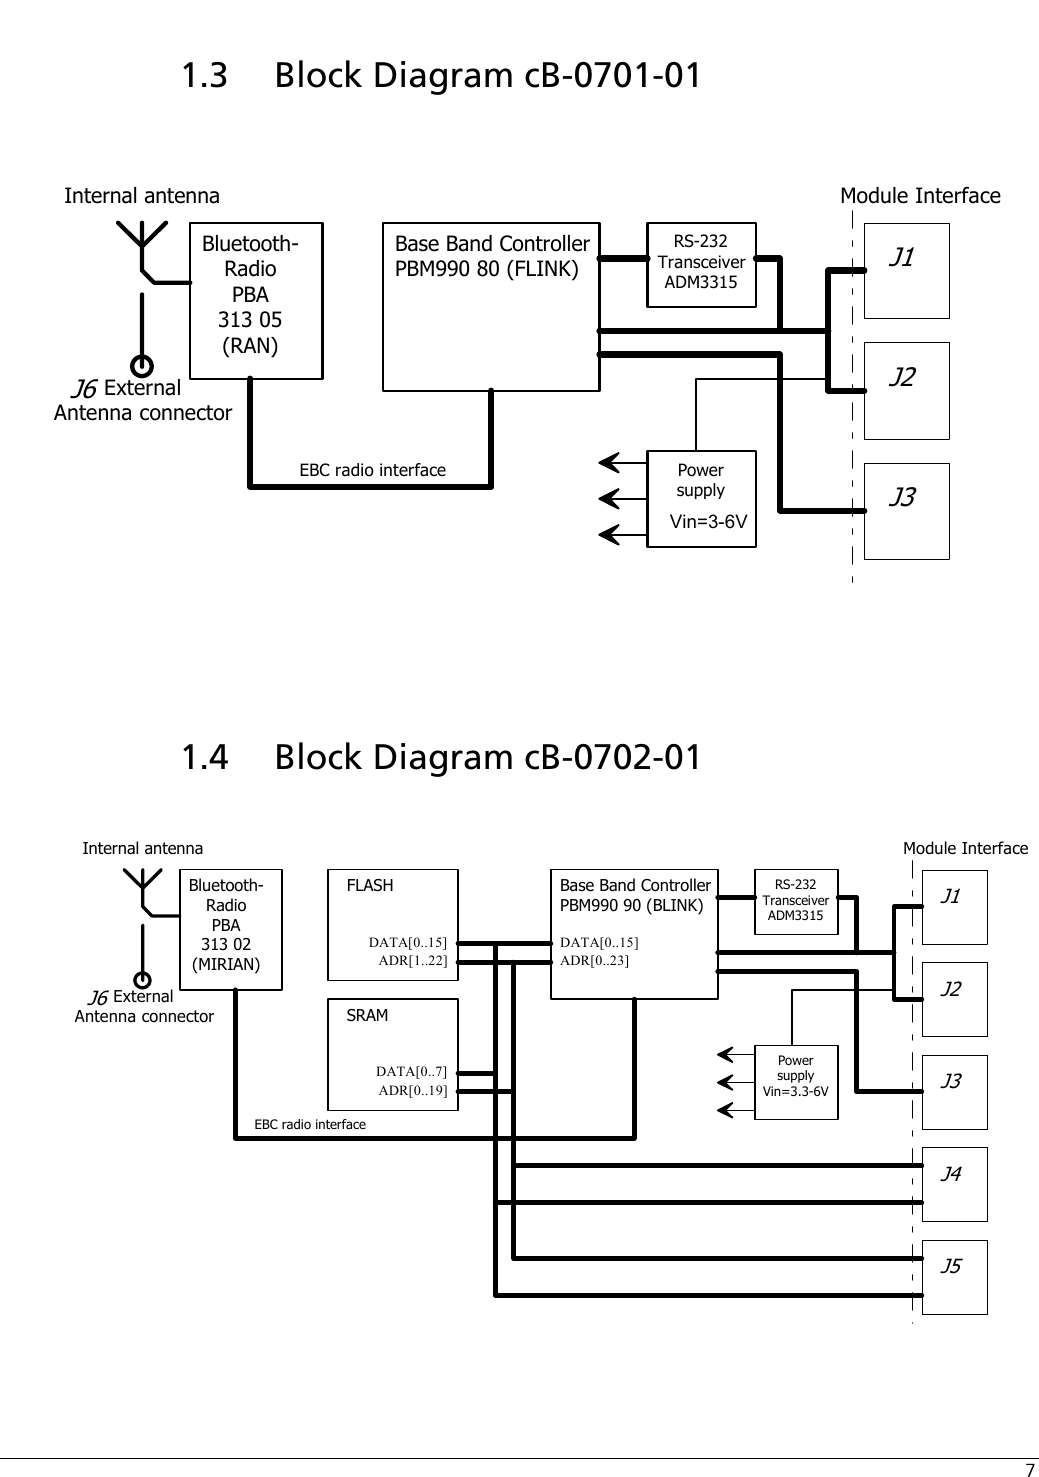  7 1.3  Block Diagram cB-0701-01     1.4  Block Diagram cB-0702-01  ADR[1..22]DATA[0..15]ADR[0..19]DATA[0..7]Base Band ControllerPBM990 90 (BLINK)FLASH1 - 8MbyteSRAM128k - 1MbyteEBC radio interfaceRS-232TransceiverADM3315Bluetooth-RadioPBA313 02(MIRIAN)PowersupplyVin=3.3-6VModule InterfaceADR[0..23]DATA[0..15]Internal antennaExternal Antenna connectorJ1J2J4J5J3J6   Base Band ControllerPBM990 80 (FLINK)EBC radio interfaceRS-232TransceiverADM3315Bluetooth-RadioPBA313 05(RAN)PowersupplyVin=3.3-6VModule InterfaceInternal antennaExternal Antenna connectorJ1J2J3J6Vin=3-6V